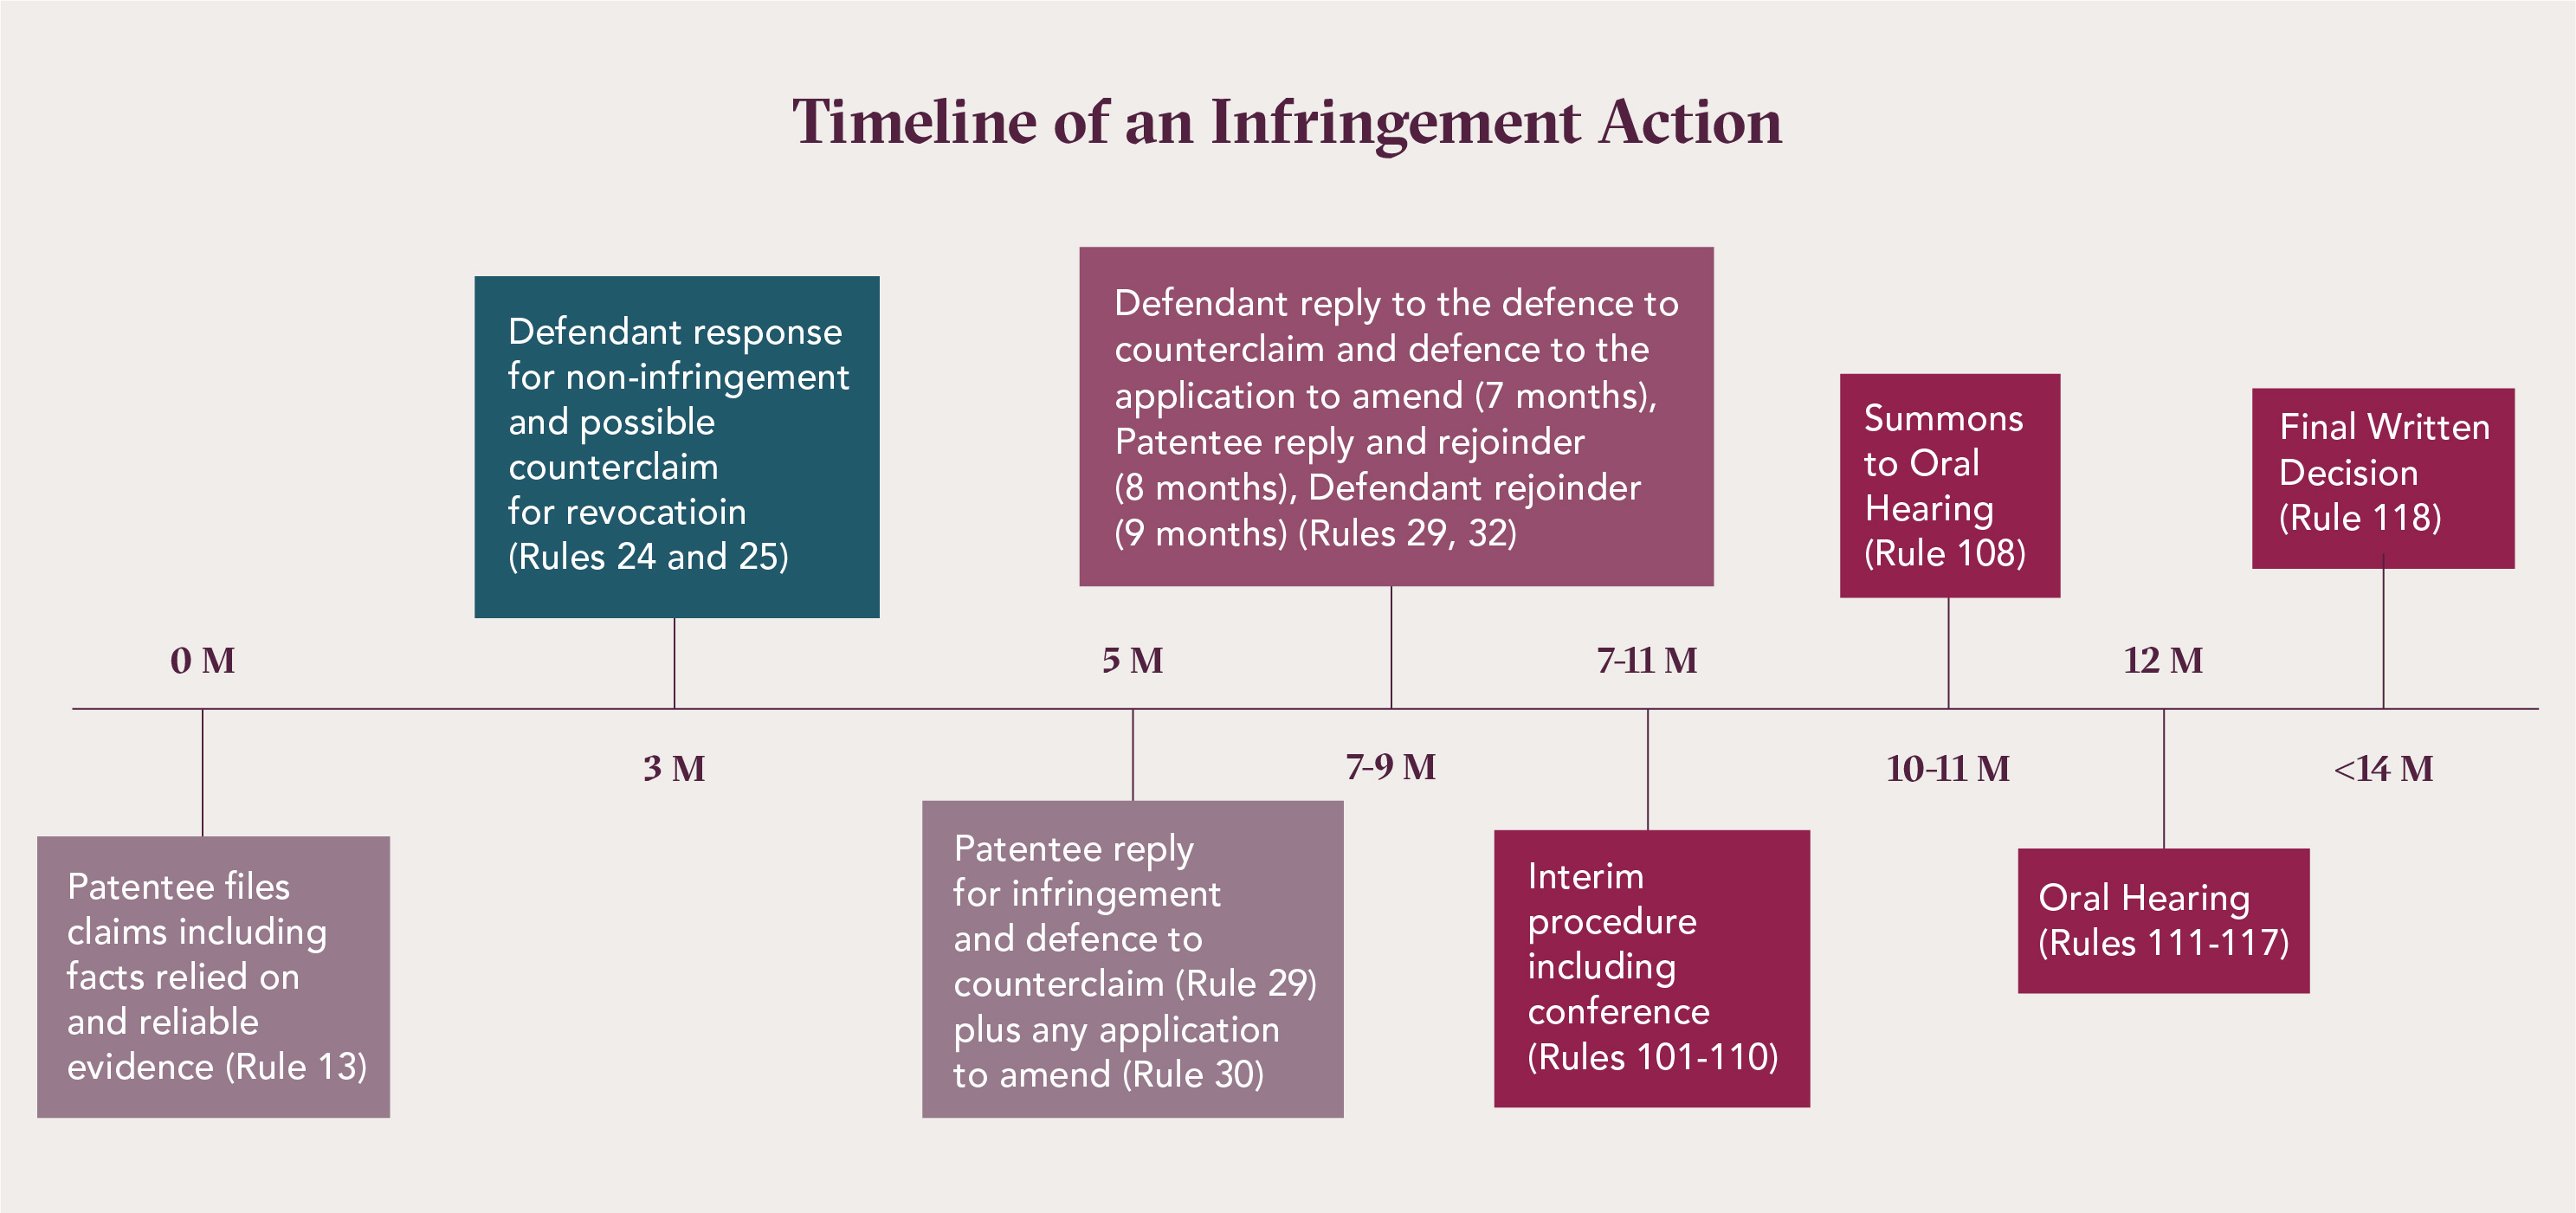 Timeline of an Infringement Action